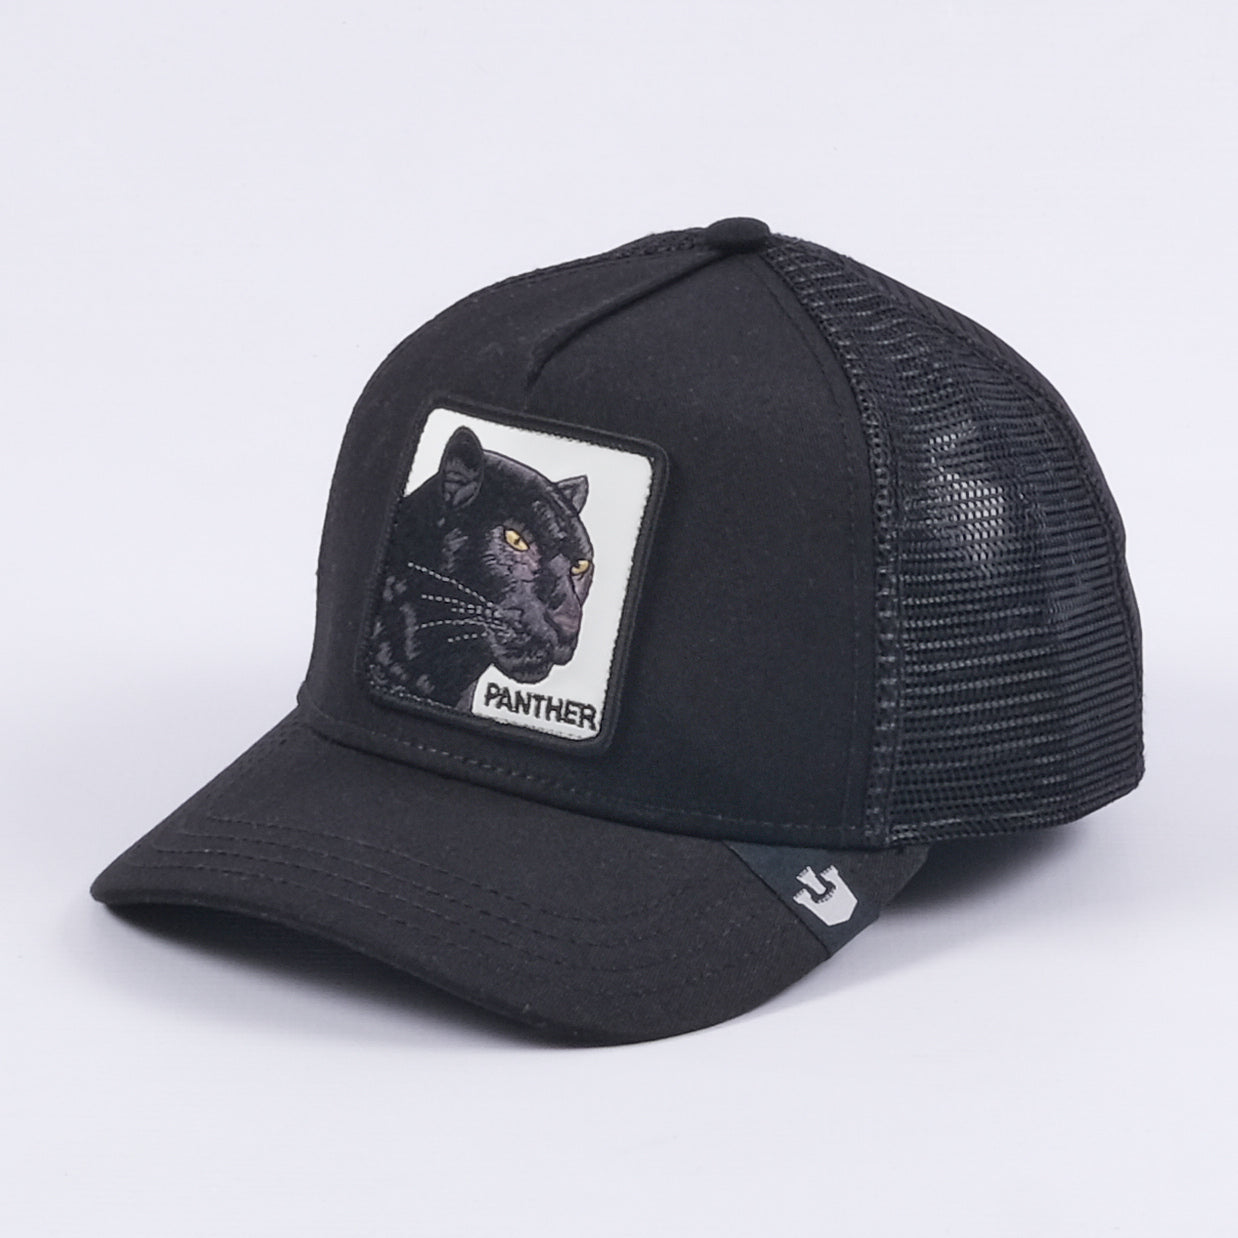 Black Panther Trucker Hat